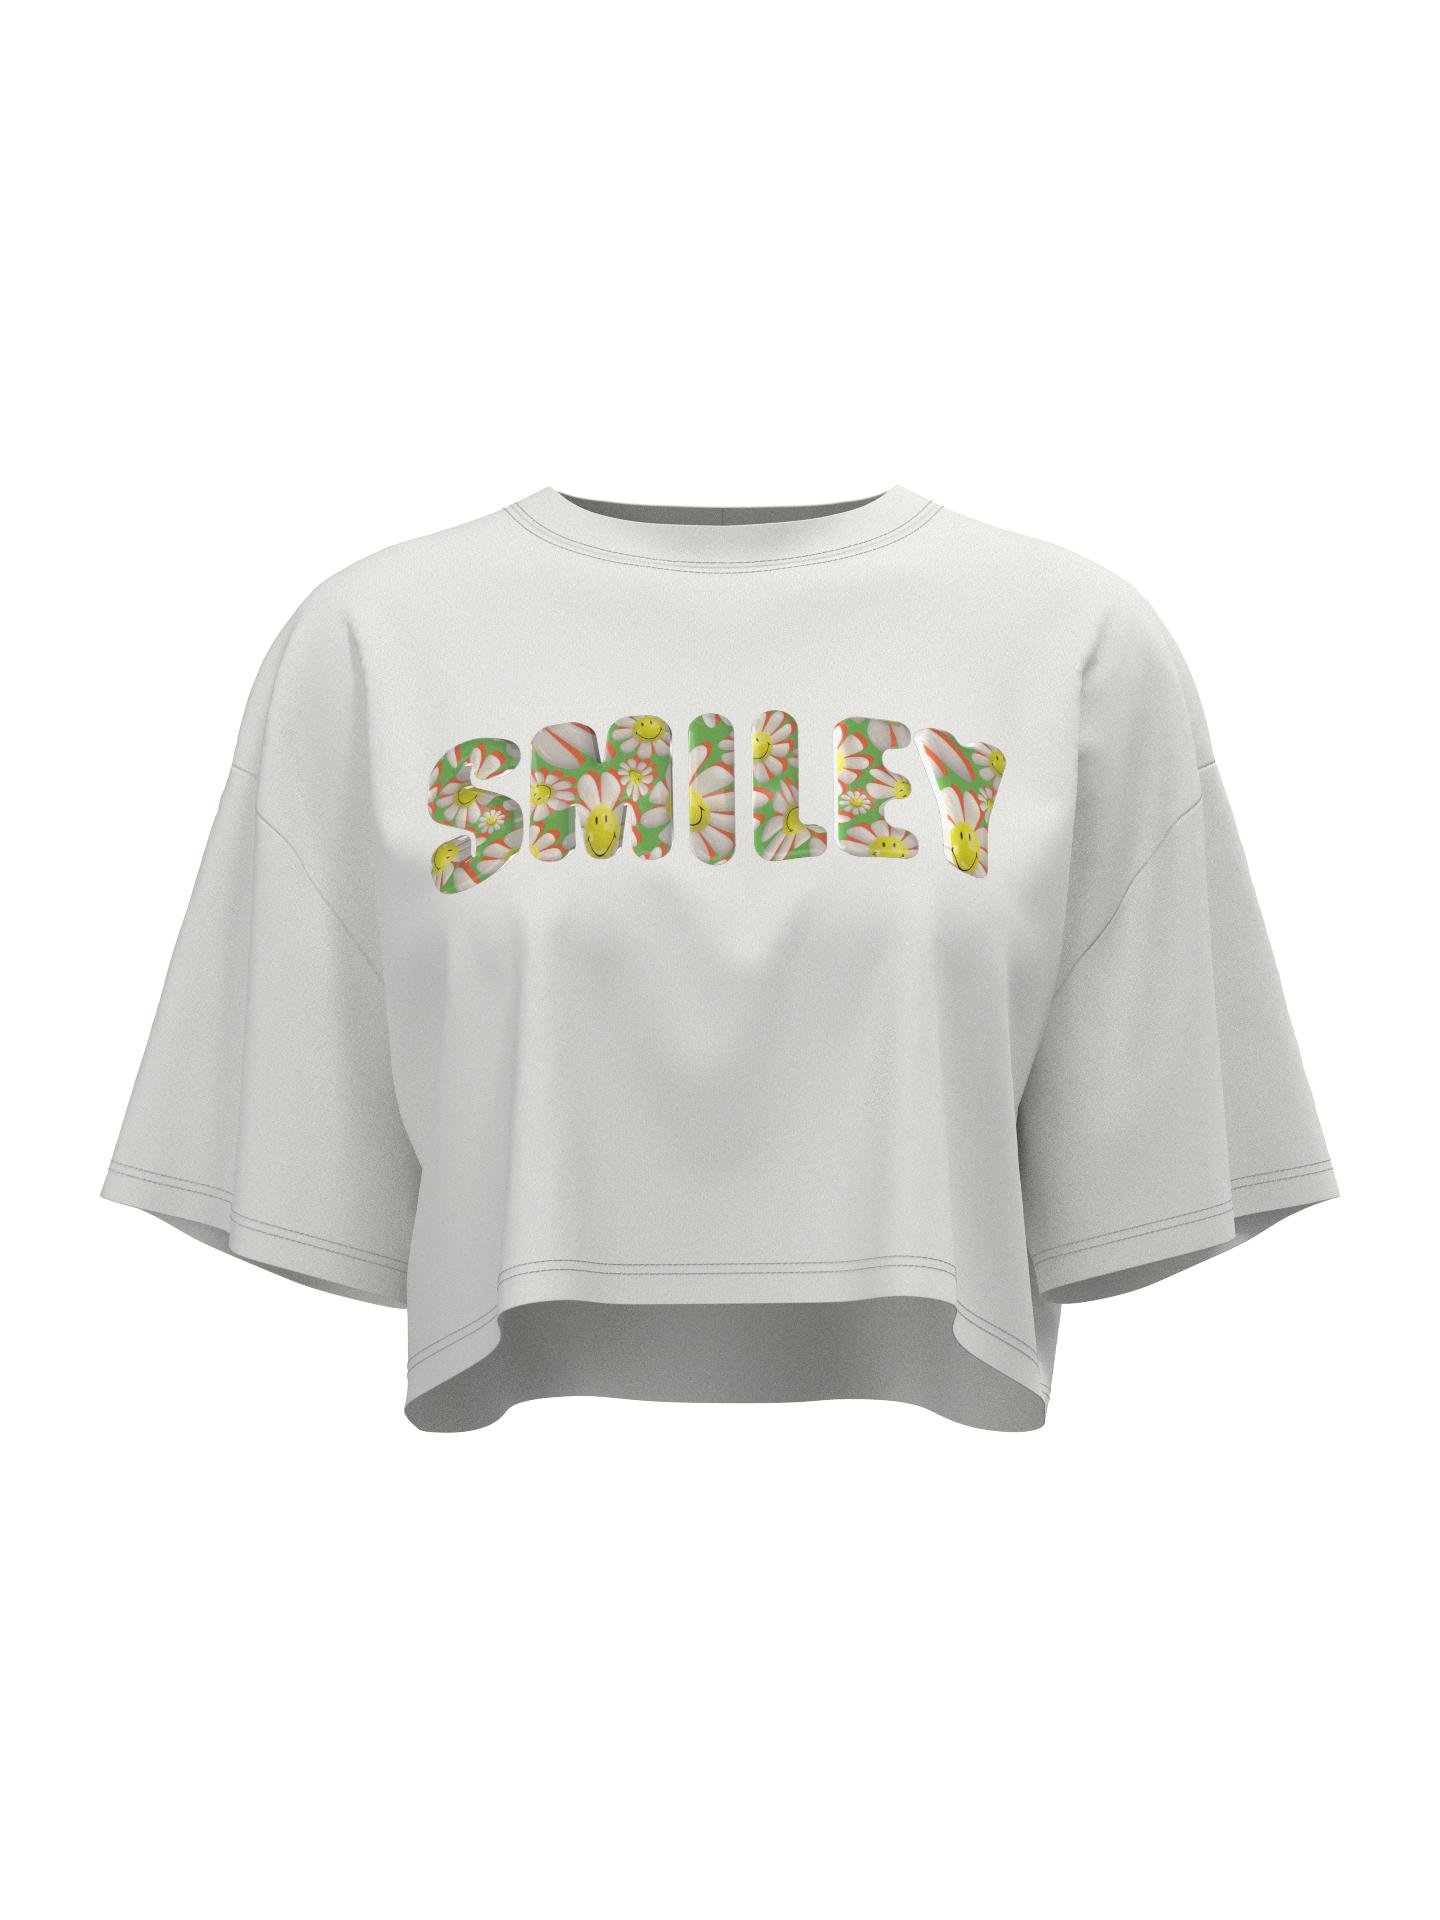 Smiley® print plush T-shirt by BERSHKA SMILEY® X DRESSX